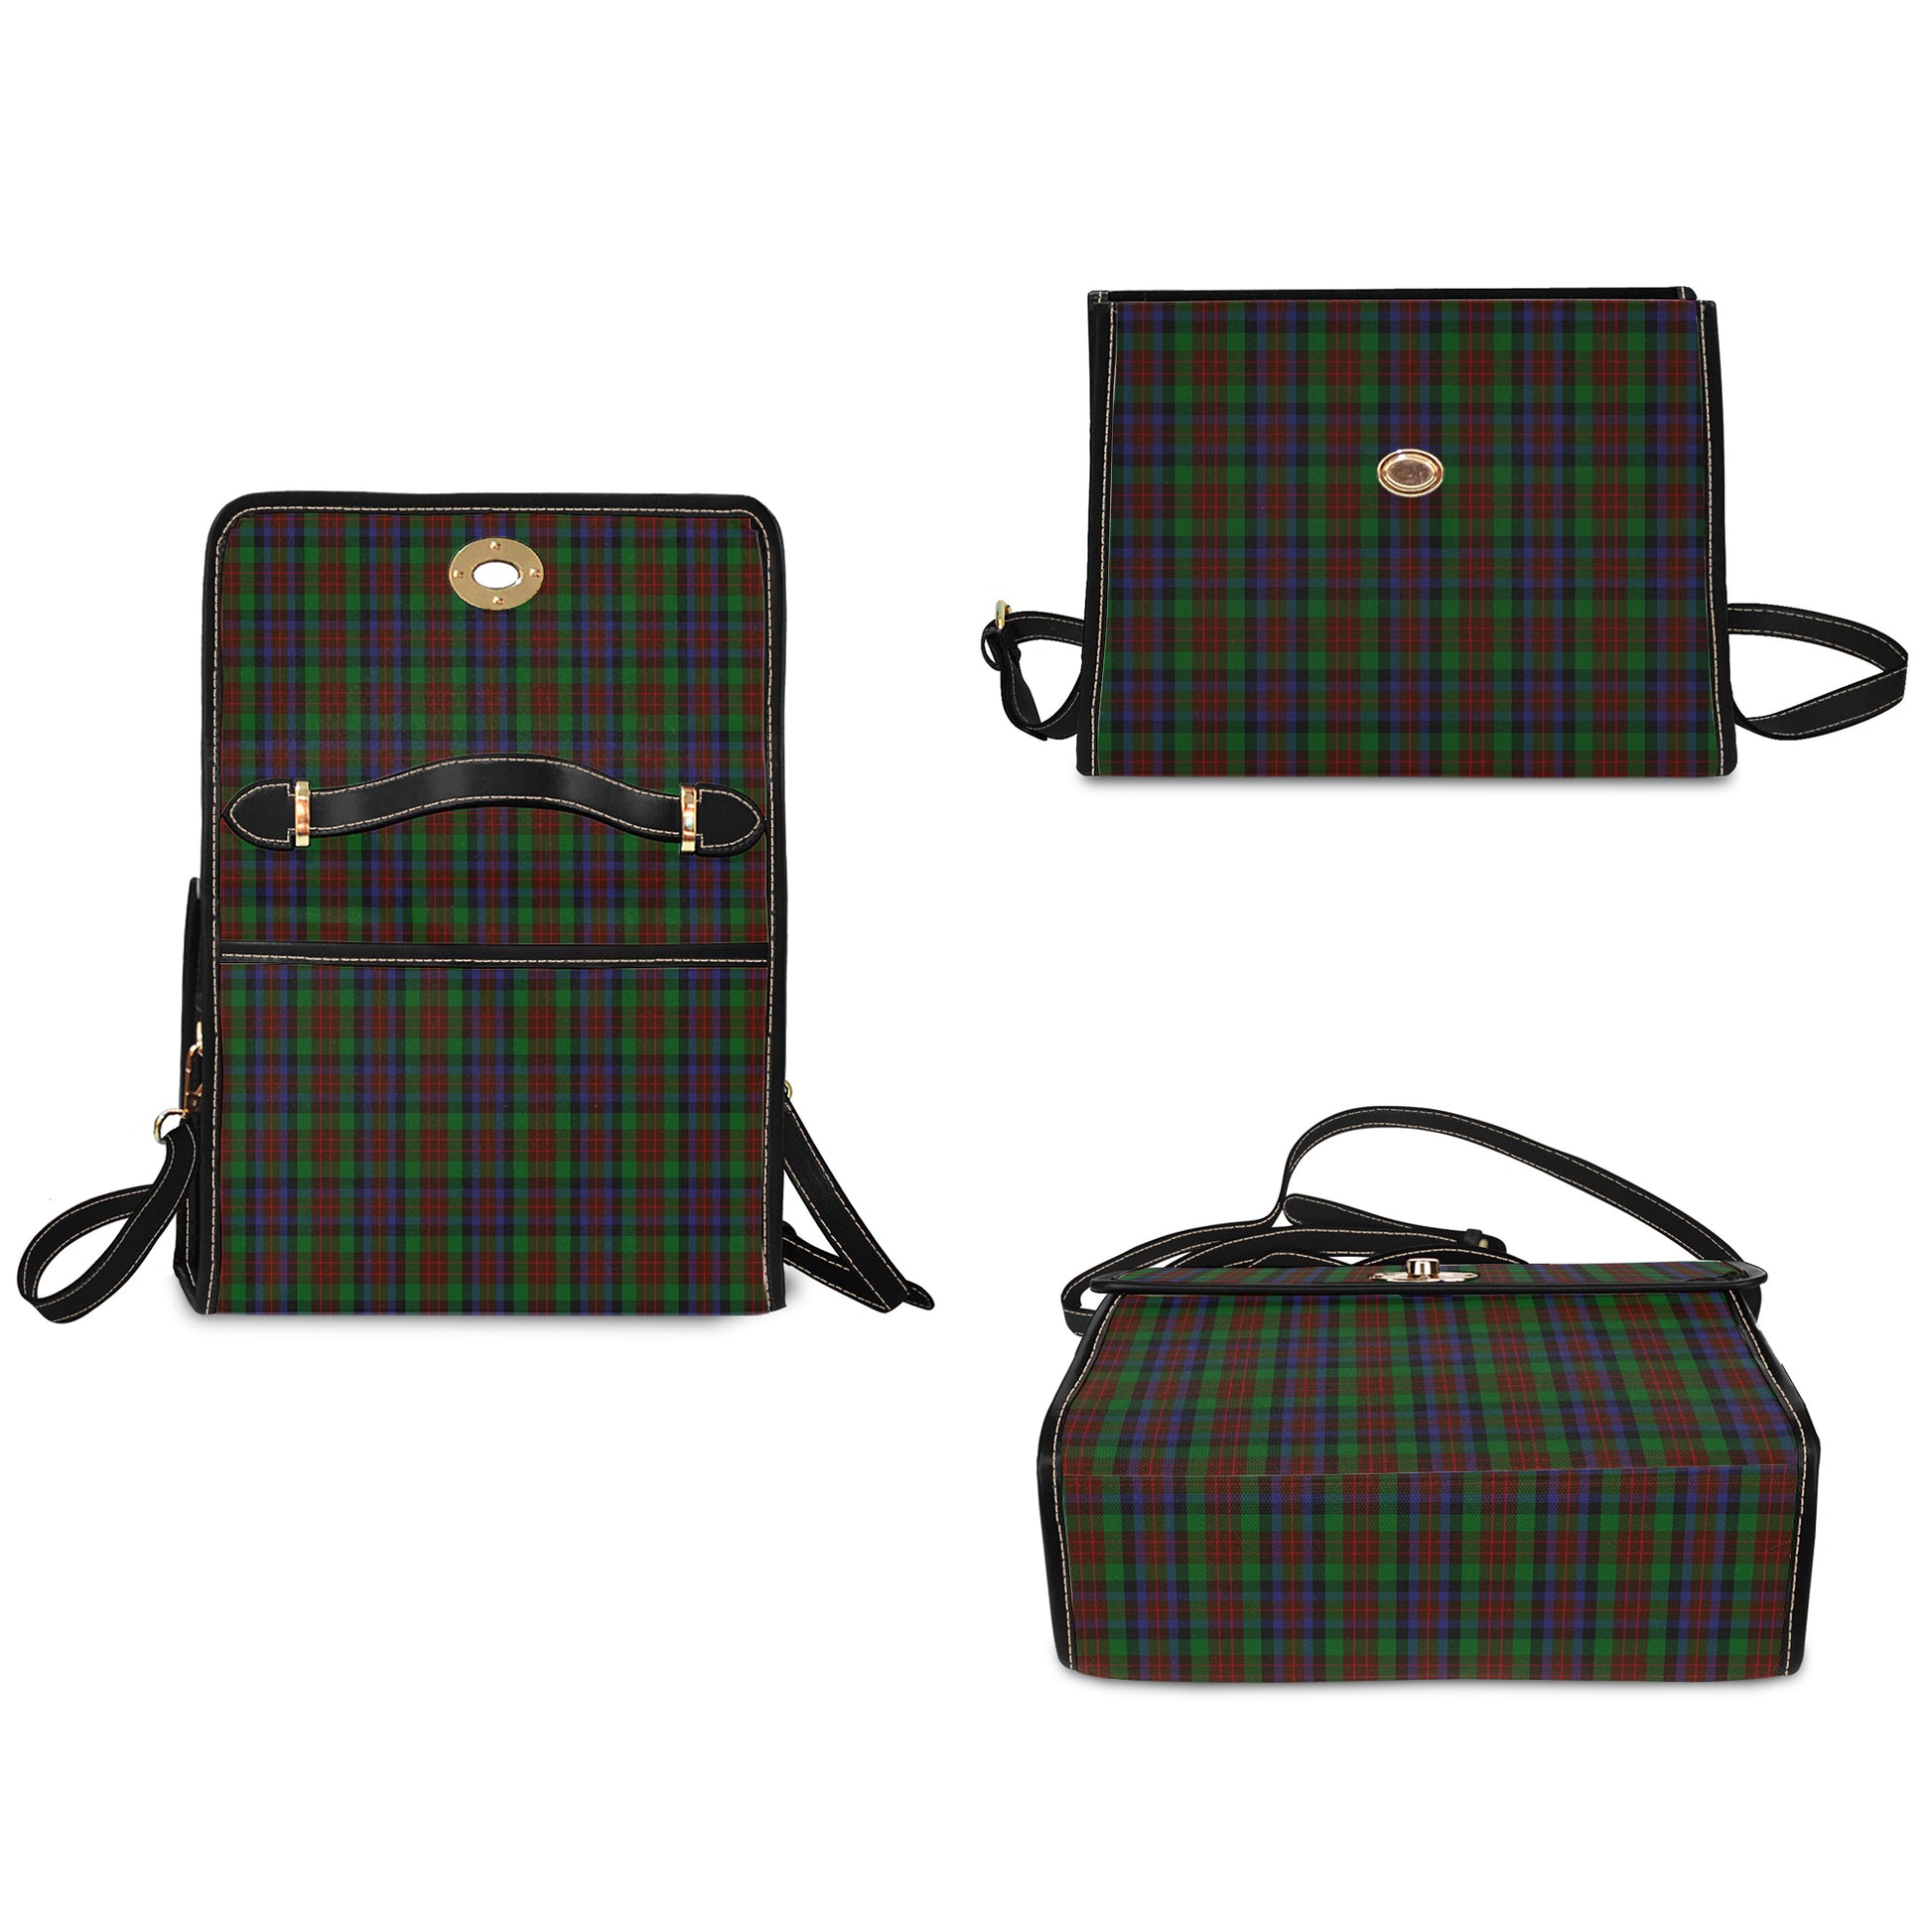 macduff-hunting-tartan-leather-strap-waterproof-canvas-bag